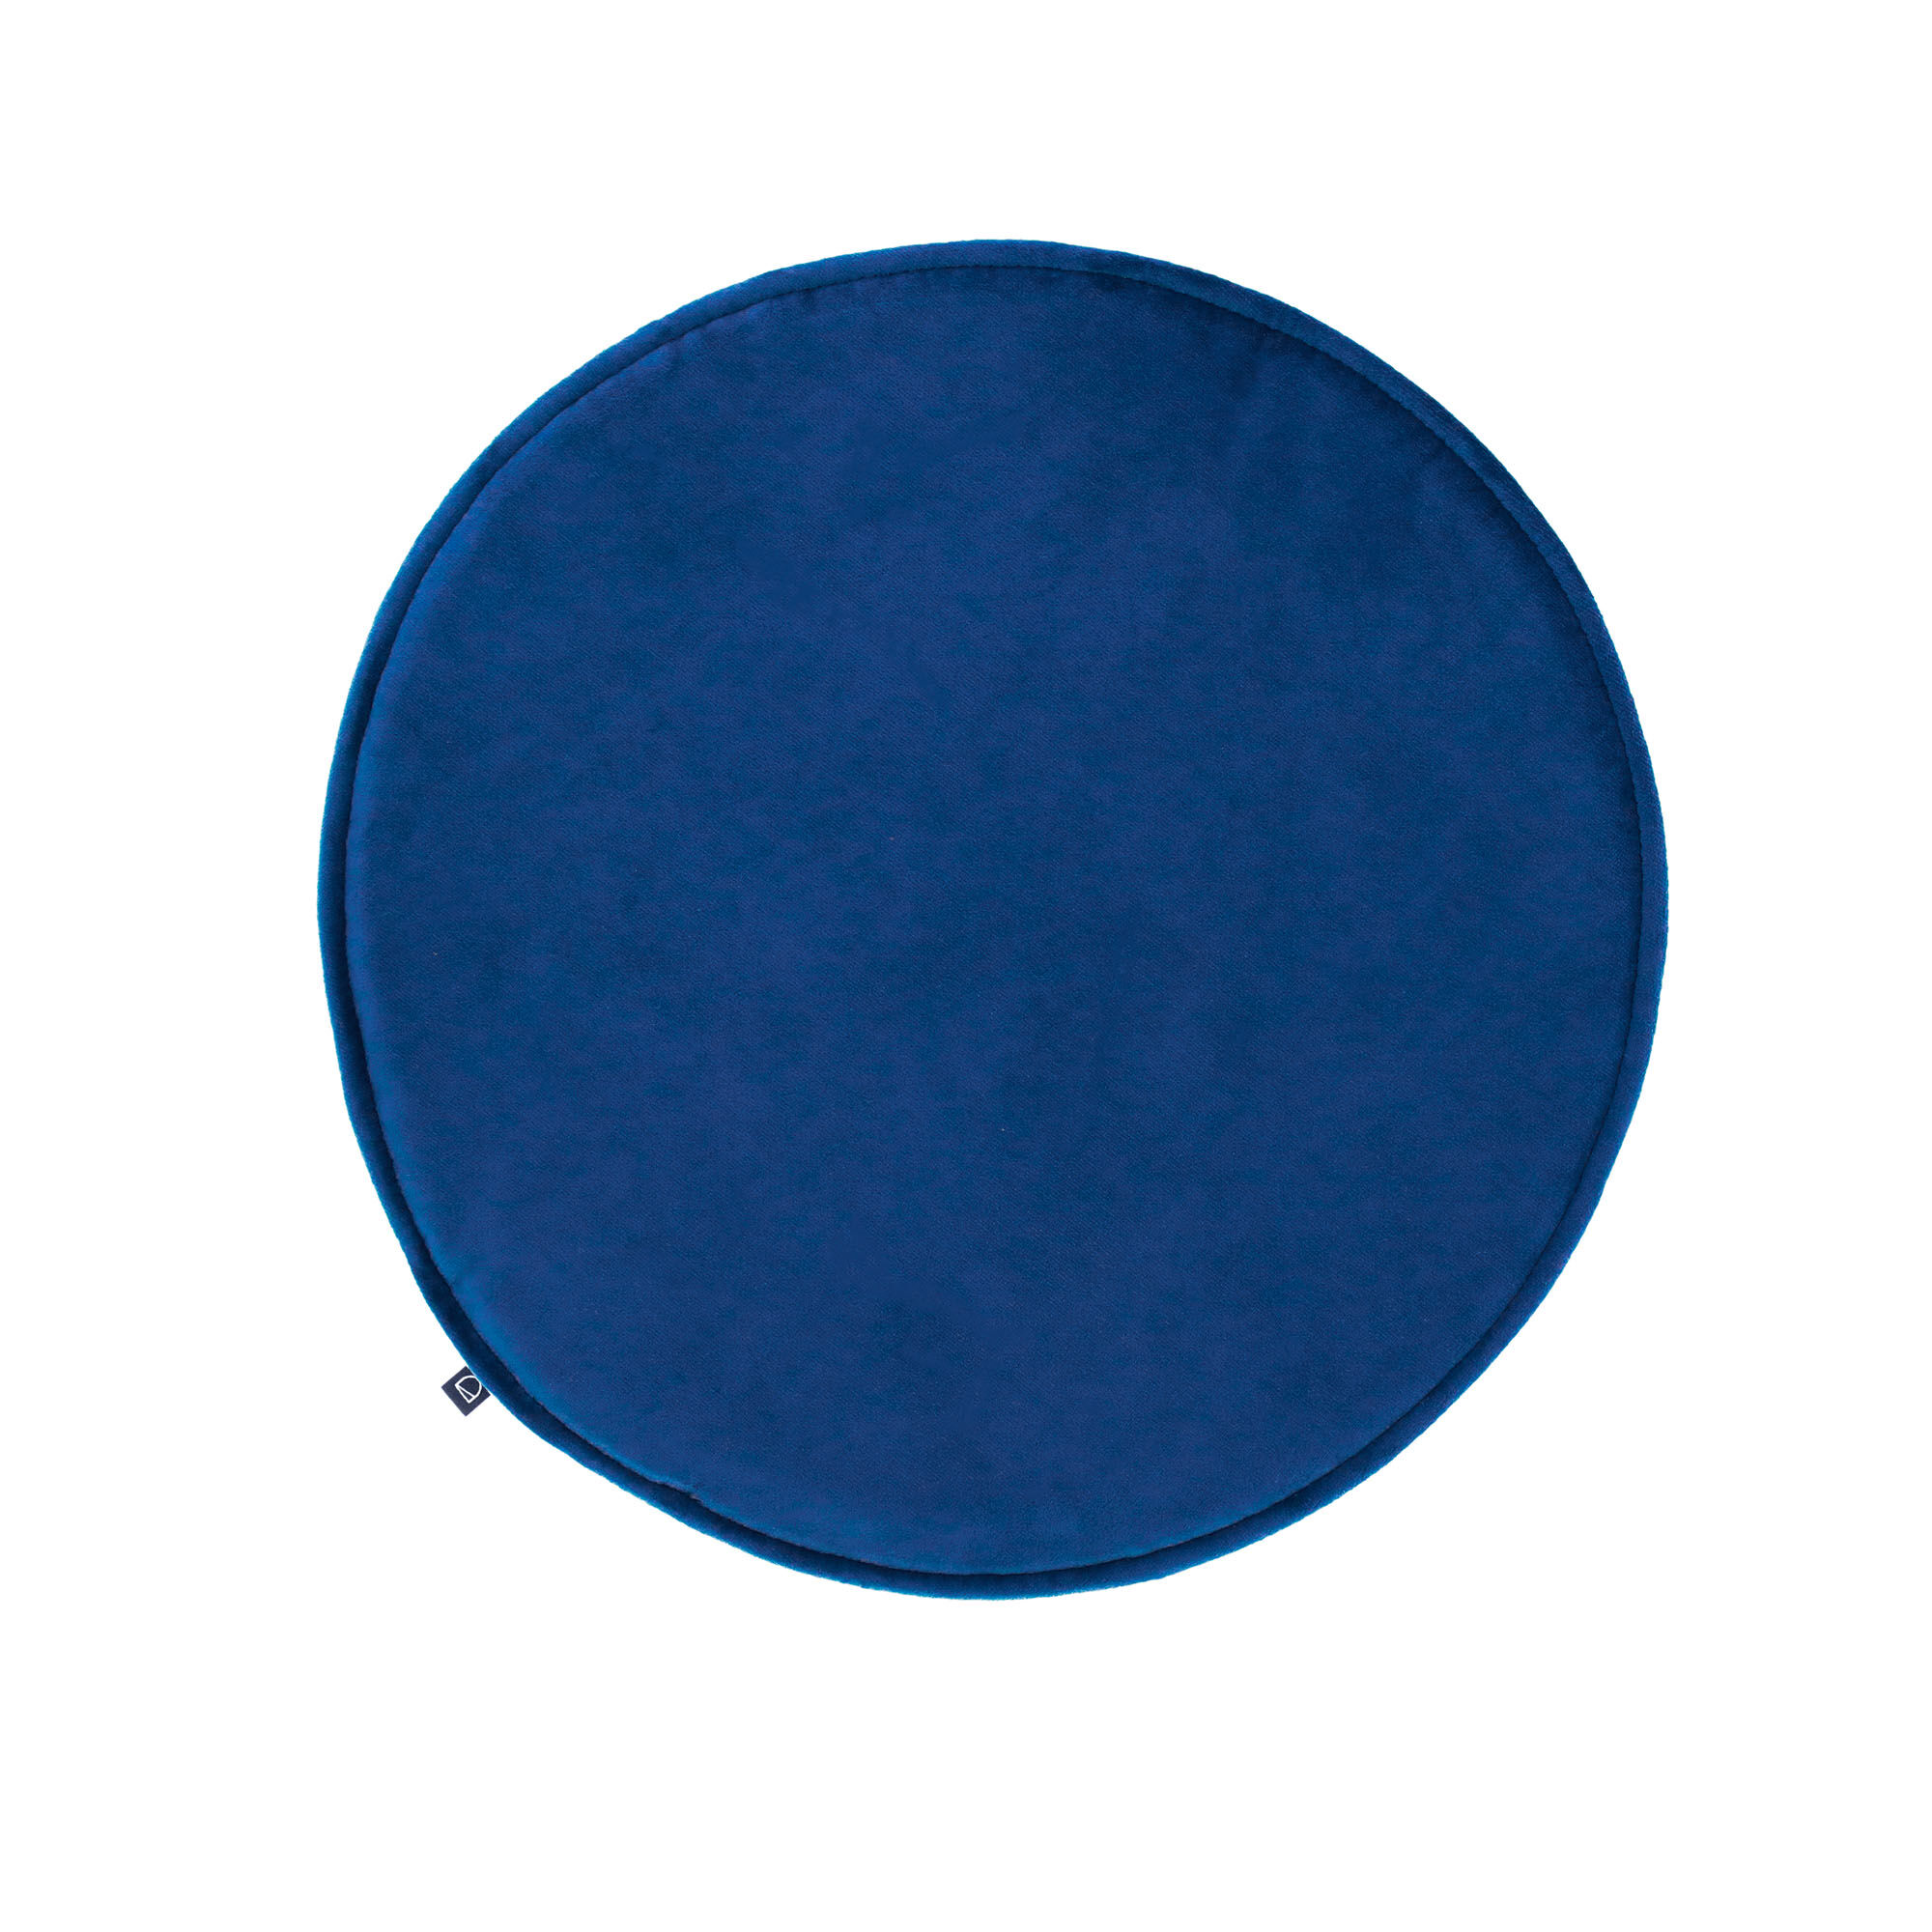 Kave Home Rimca round velvet chair cushion in blue, 35 cm